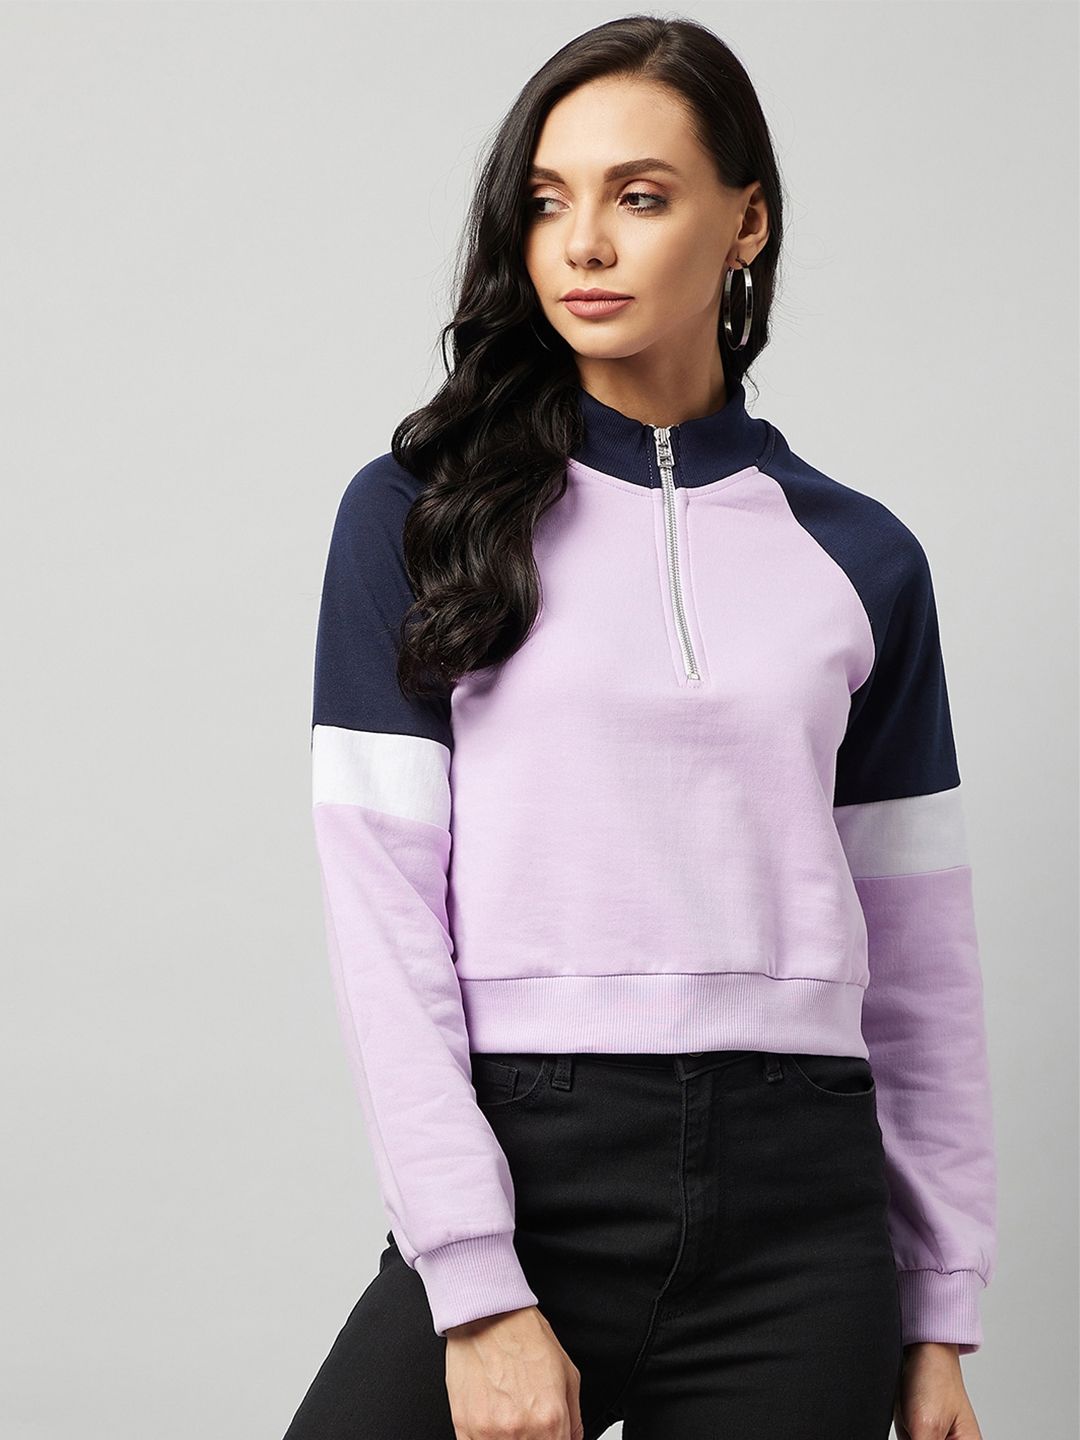 Marie Claire Women Lavender Colourblocked Sweatshirt Price in India